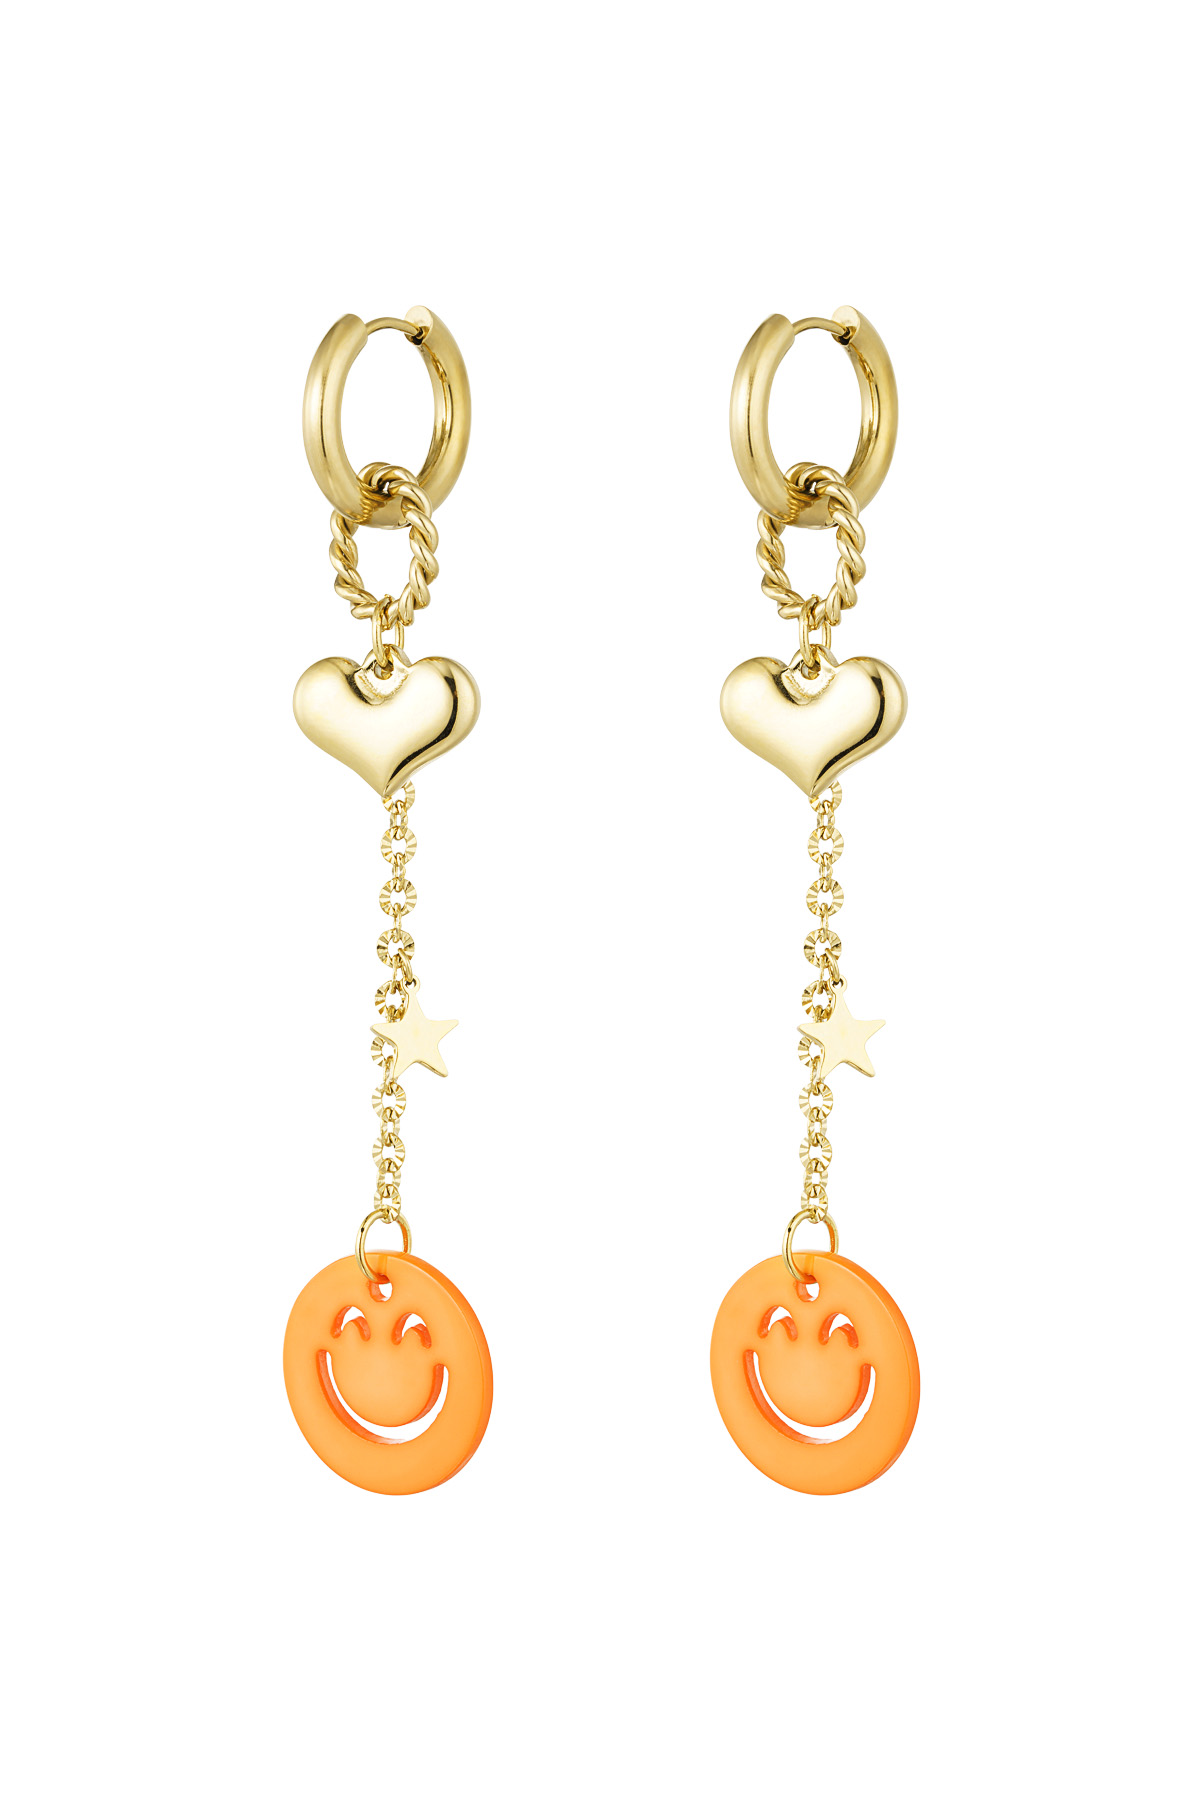 Earrings love to smile - orange gold